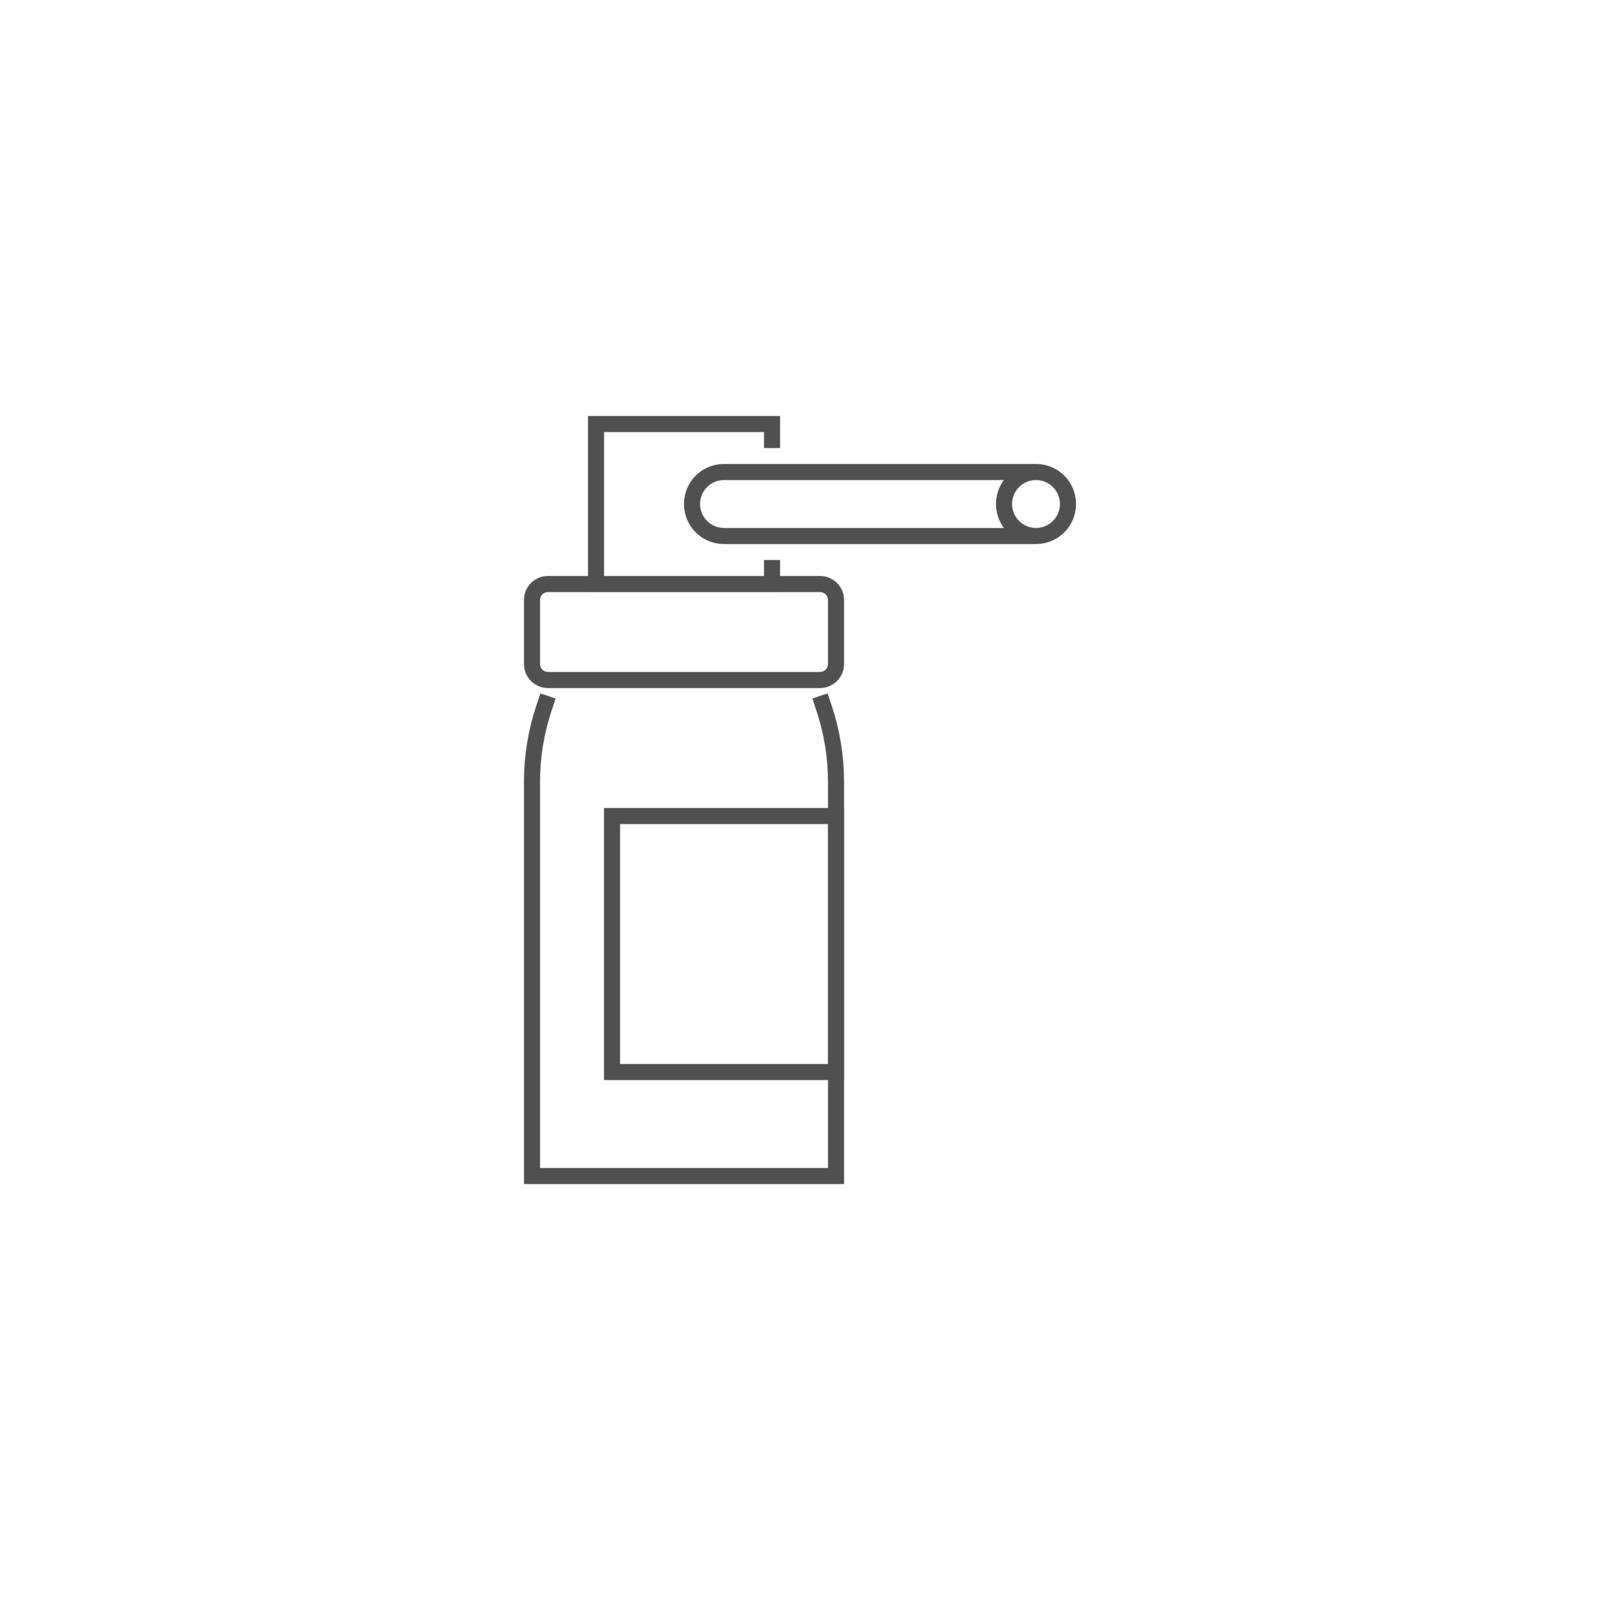 Bottle of Spray Vector Icon by smoki